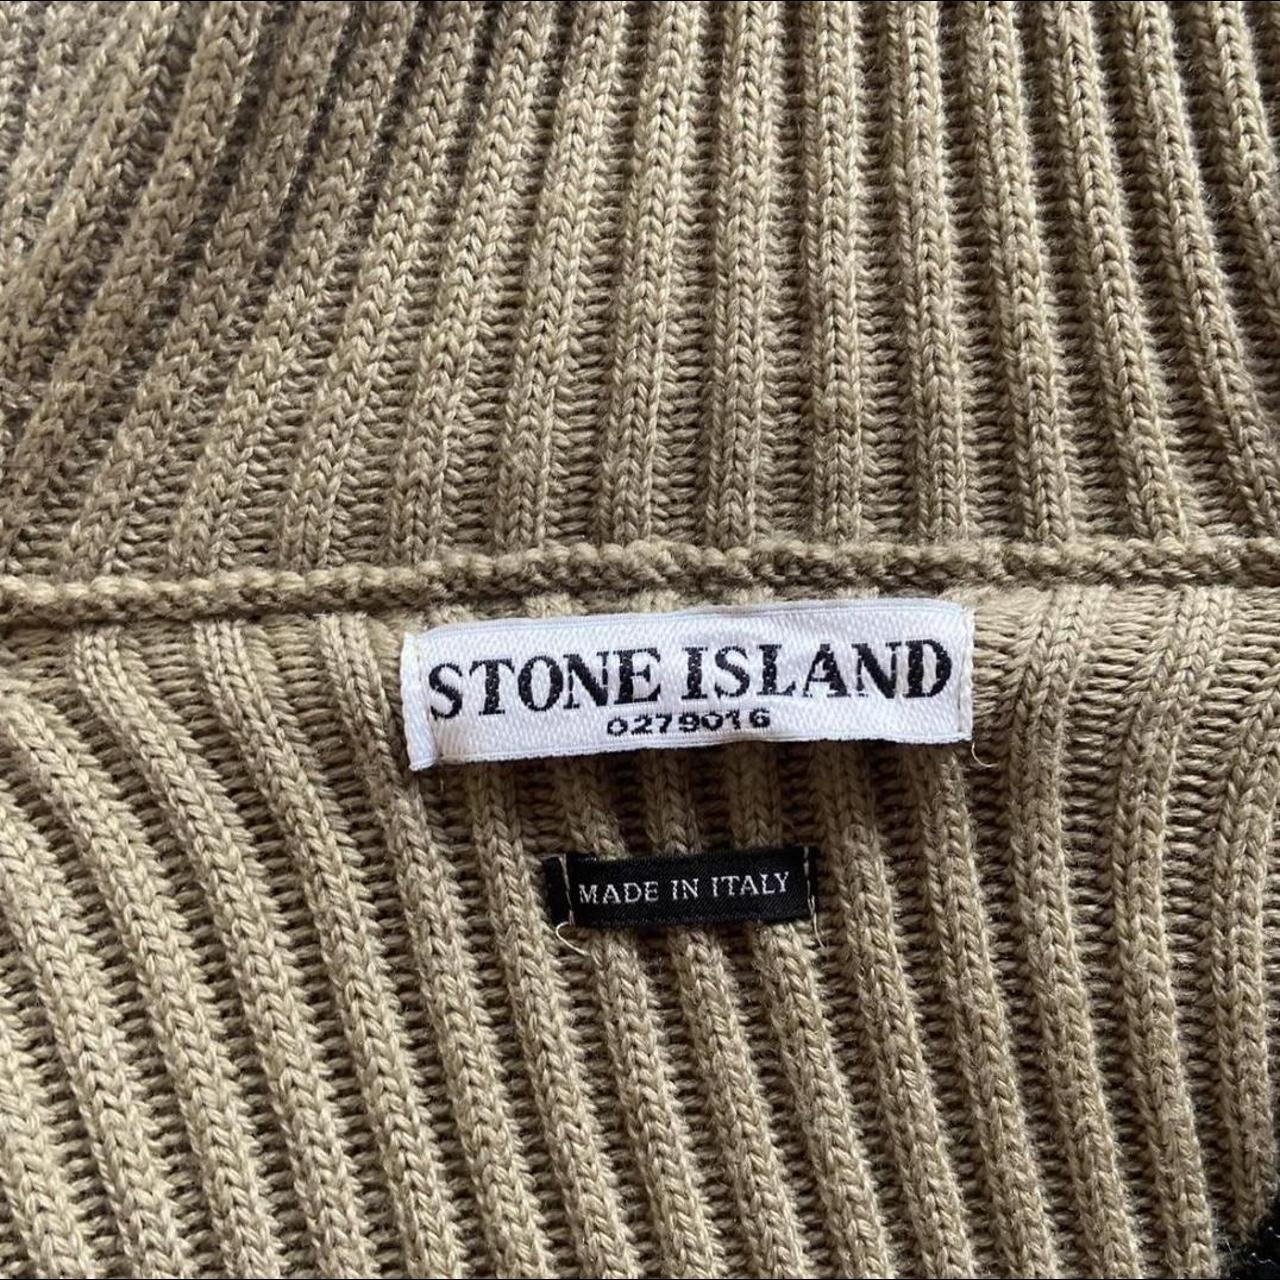 Authentic 2004 cream/tan knit stone island heavy... - Depop